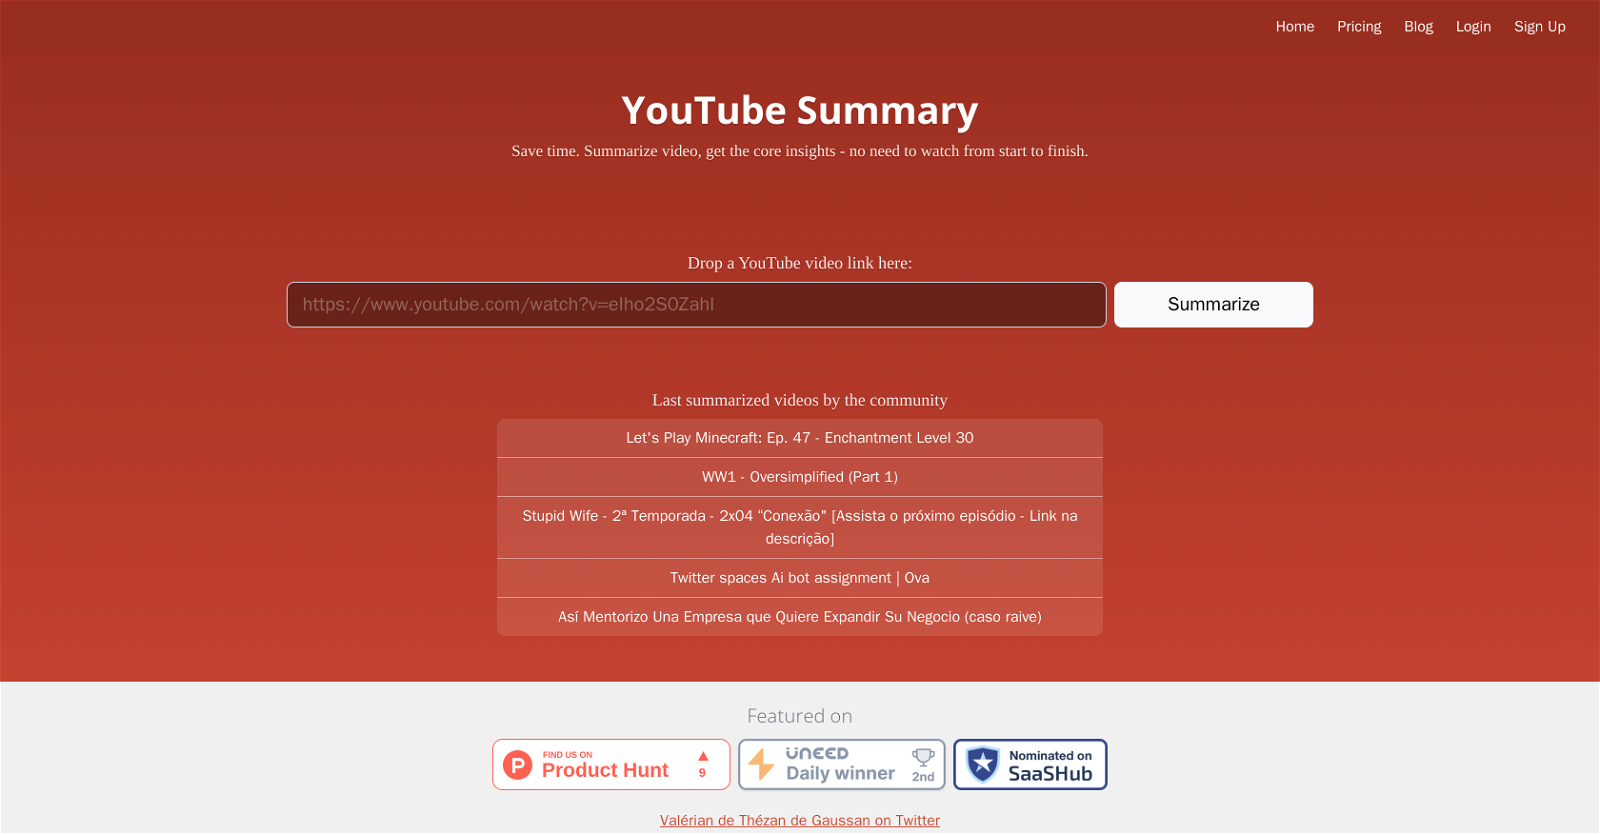 YouTube Summary website